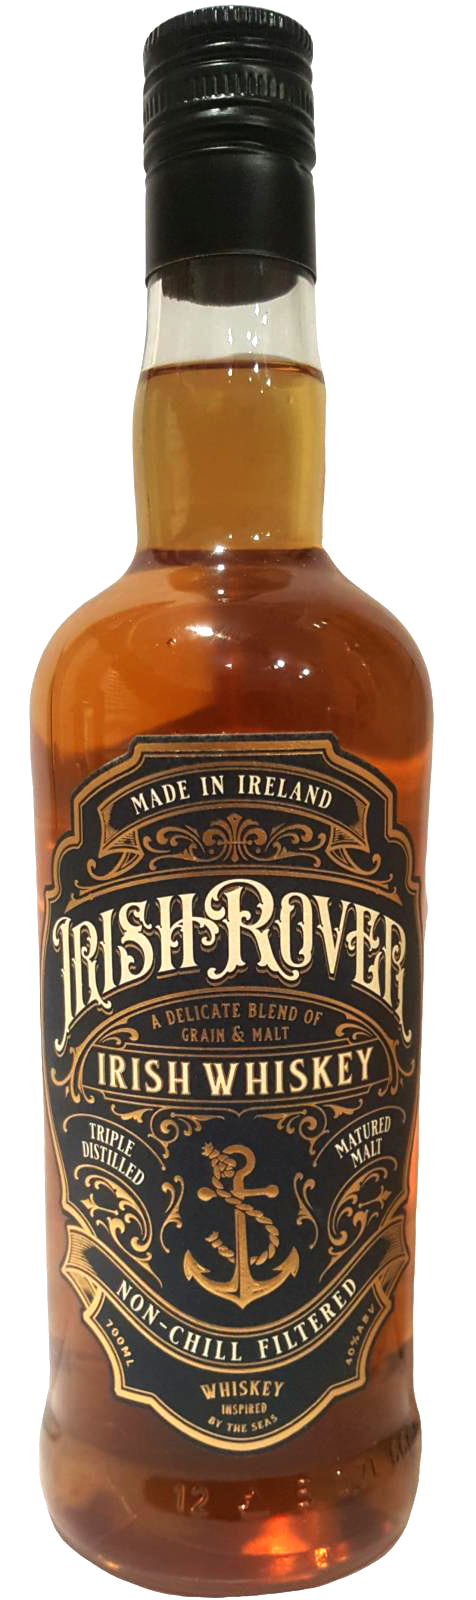 Виски Айриш Ровер купажированный 40% 0,7л (Ирландия)